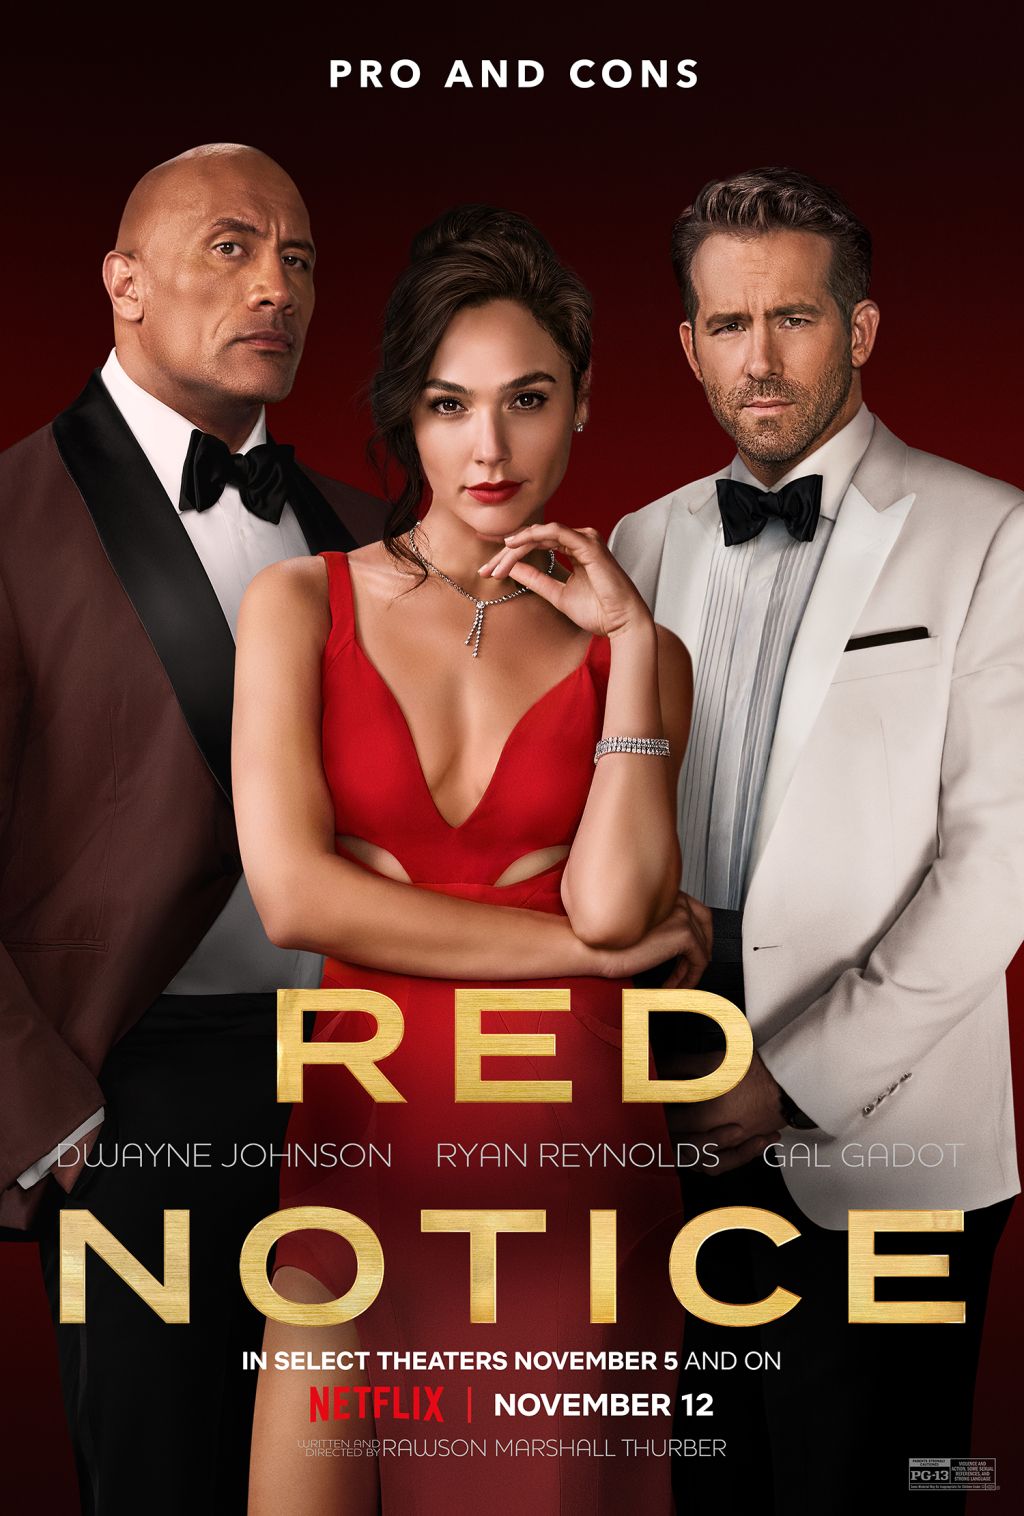 Red Notice starring Dwayne Johnson, Gal Gadot, and Ryan Reynolds